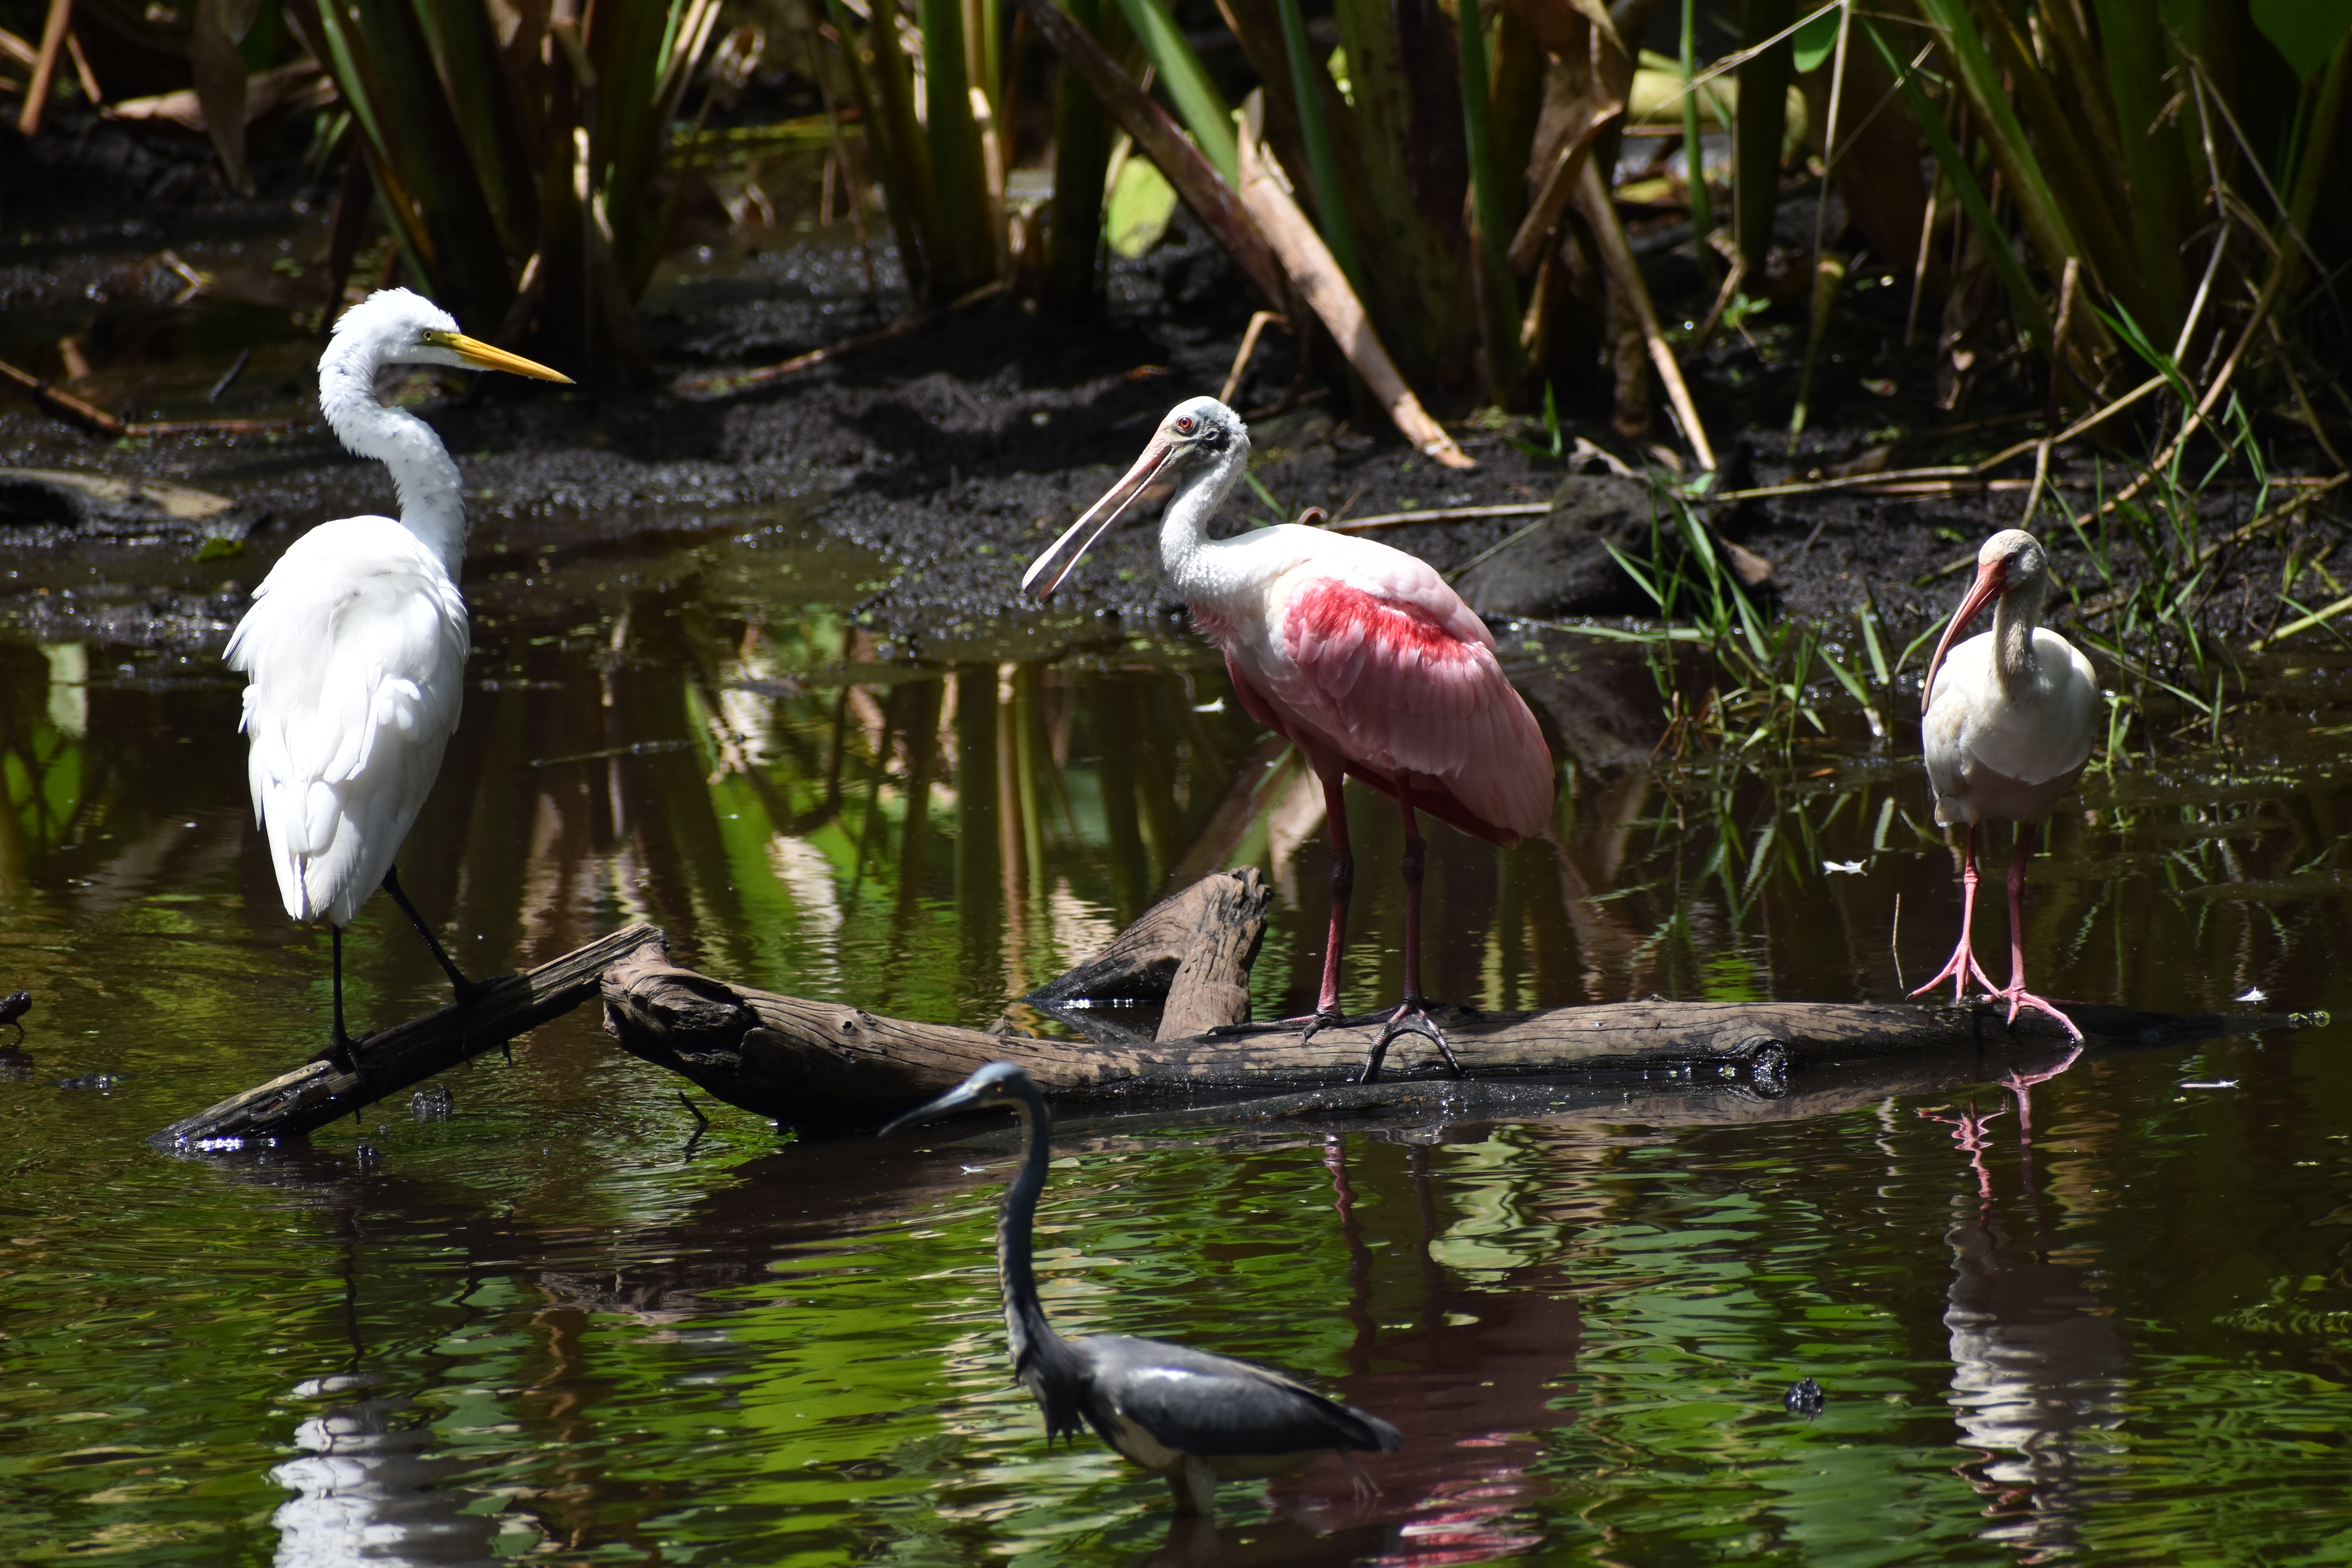 Wading birds in the swamp.